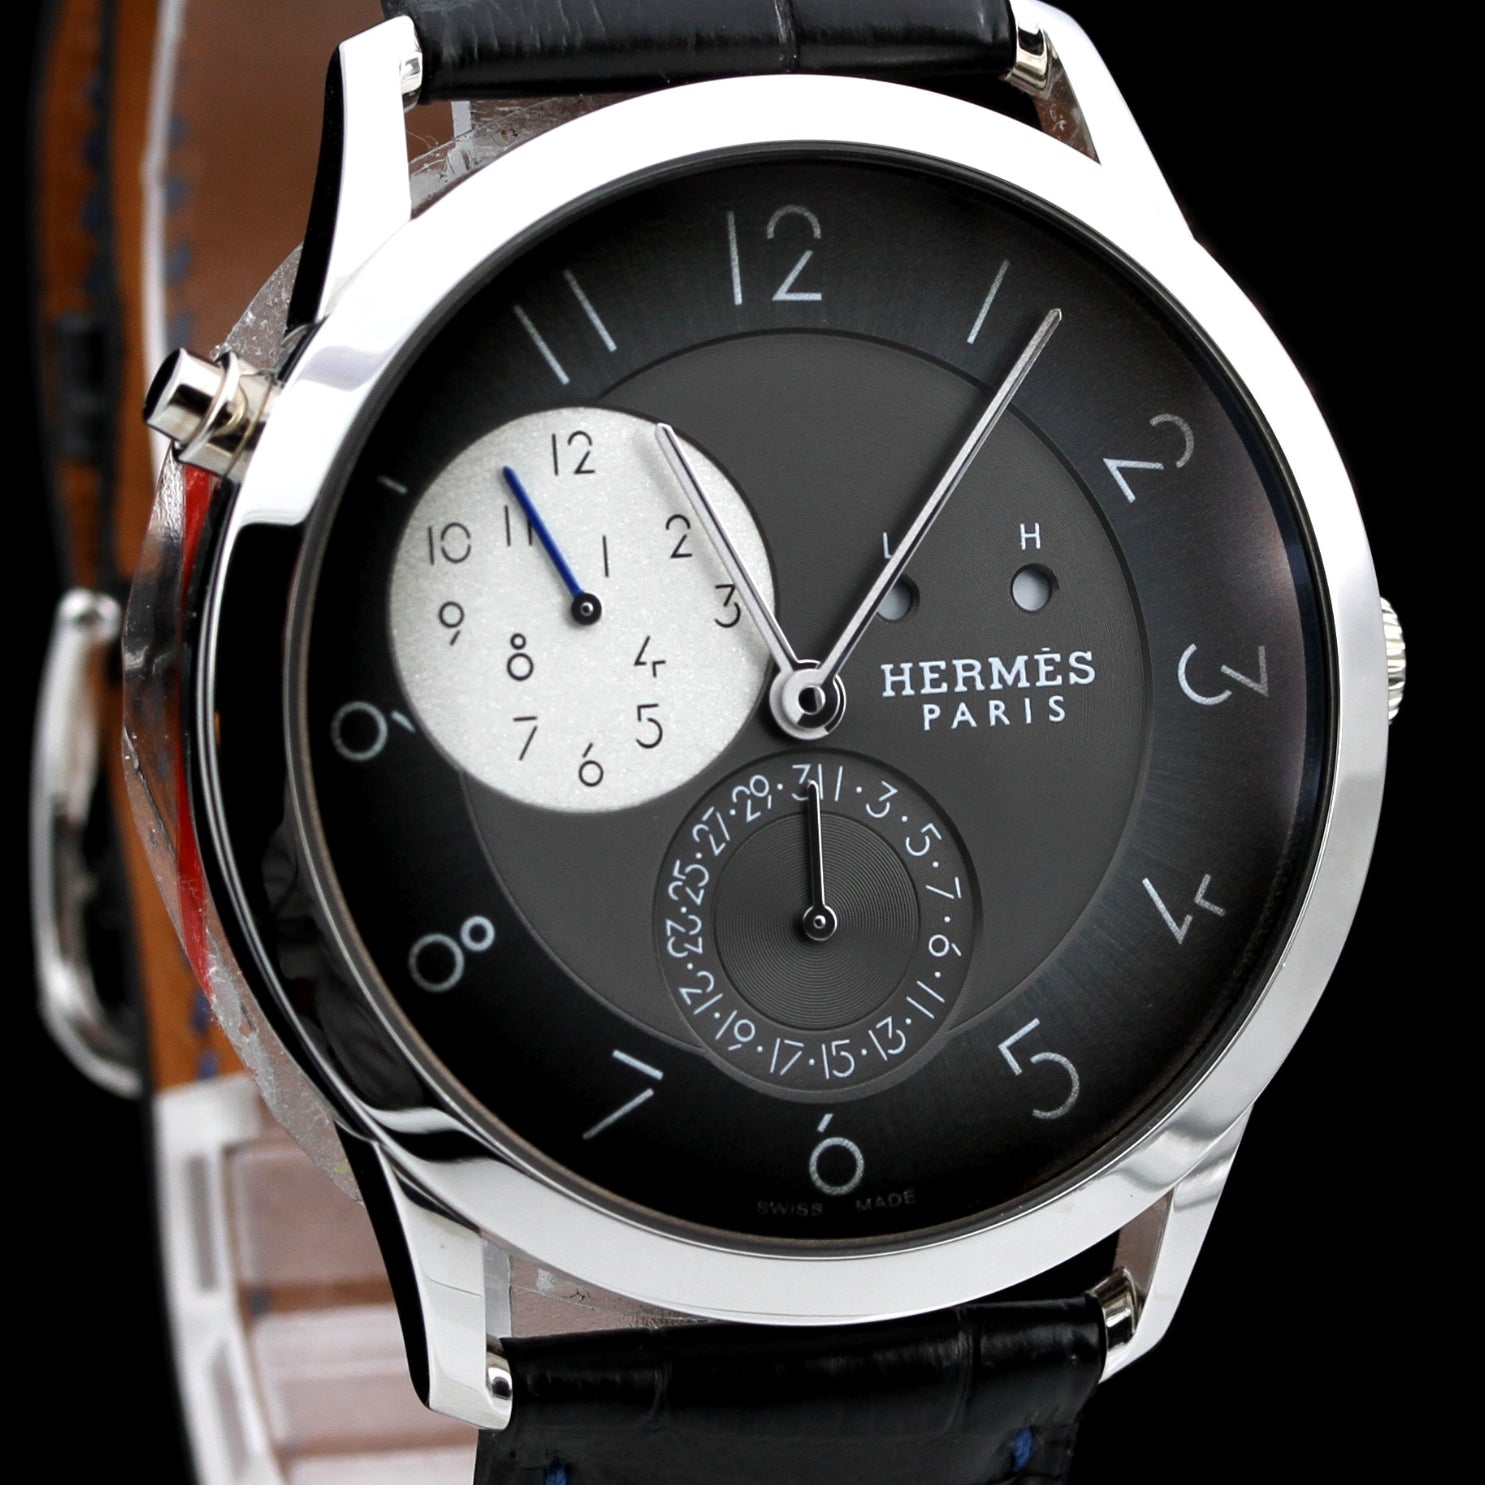 Hermes GMT Slim d´Hermes Paris, Limited Edition 120, Palladium, CA5.860, W046386WW00, B&P - LUXUHRIA